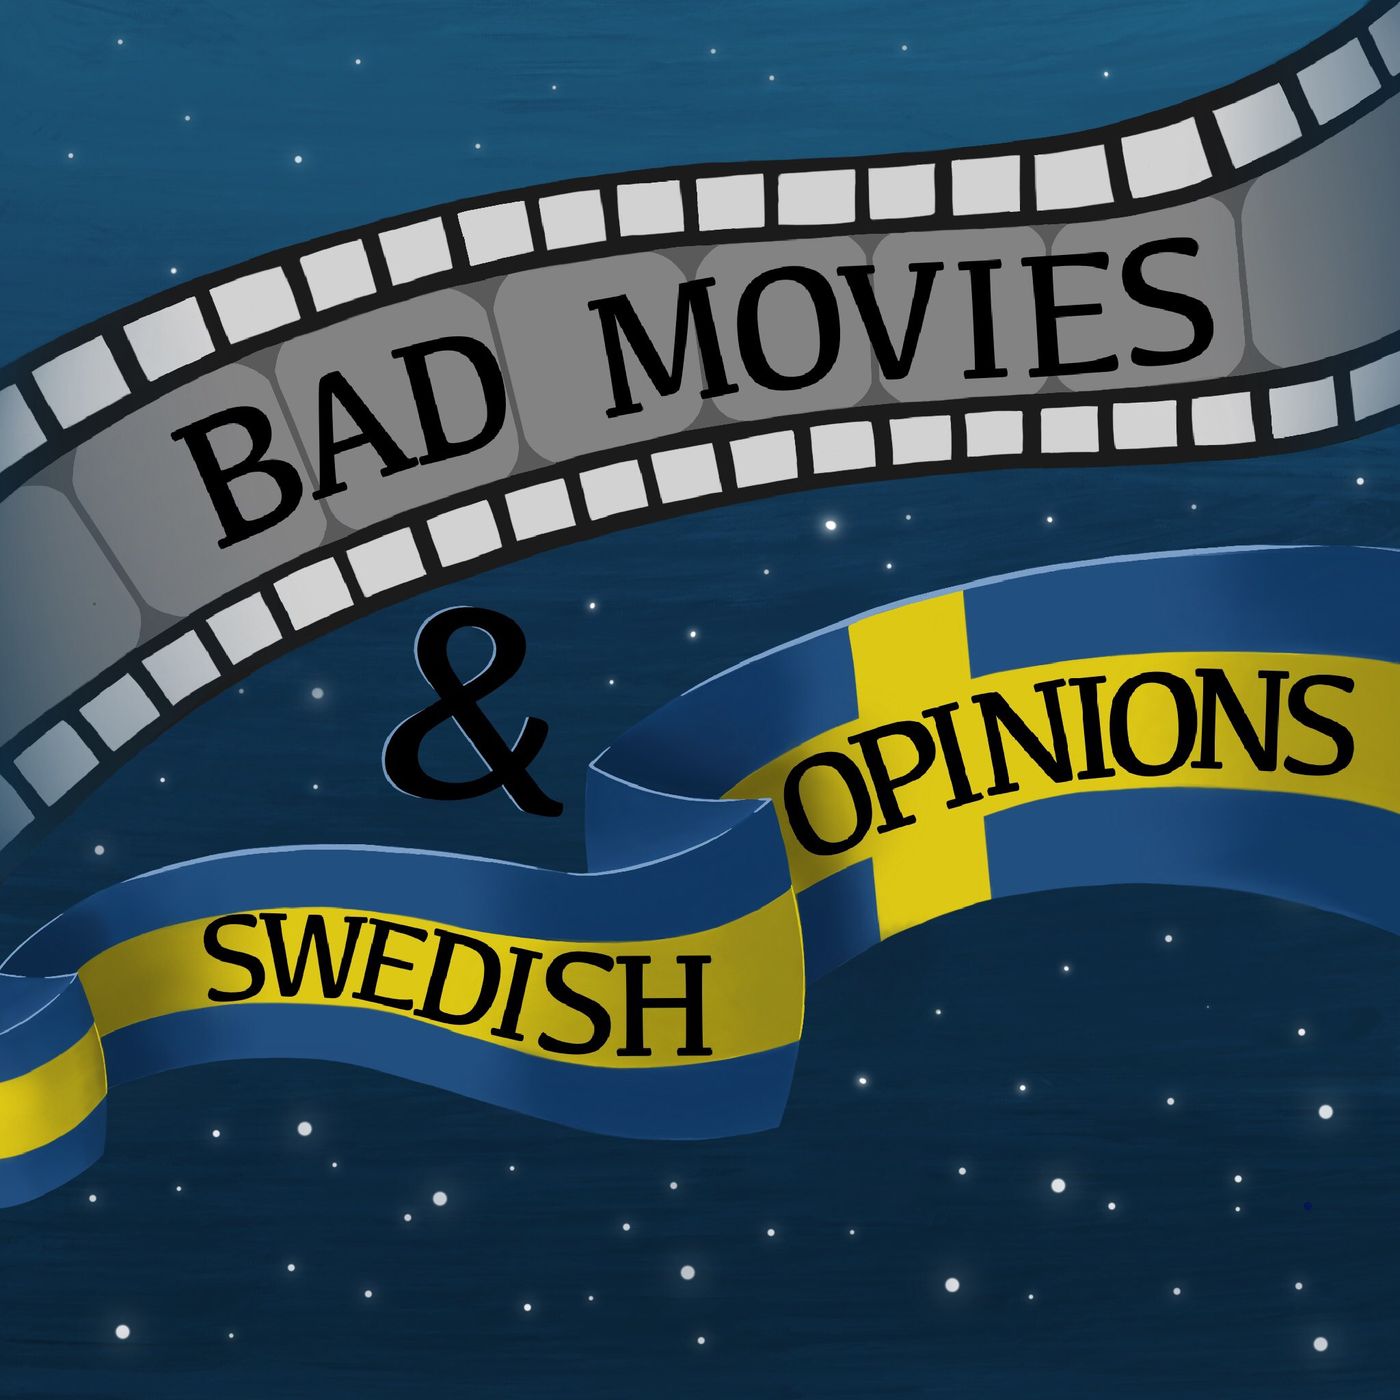 Bad Movies & Swedish Opinions